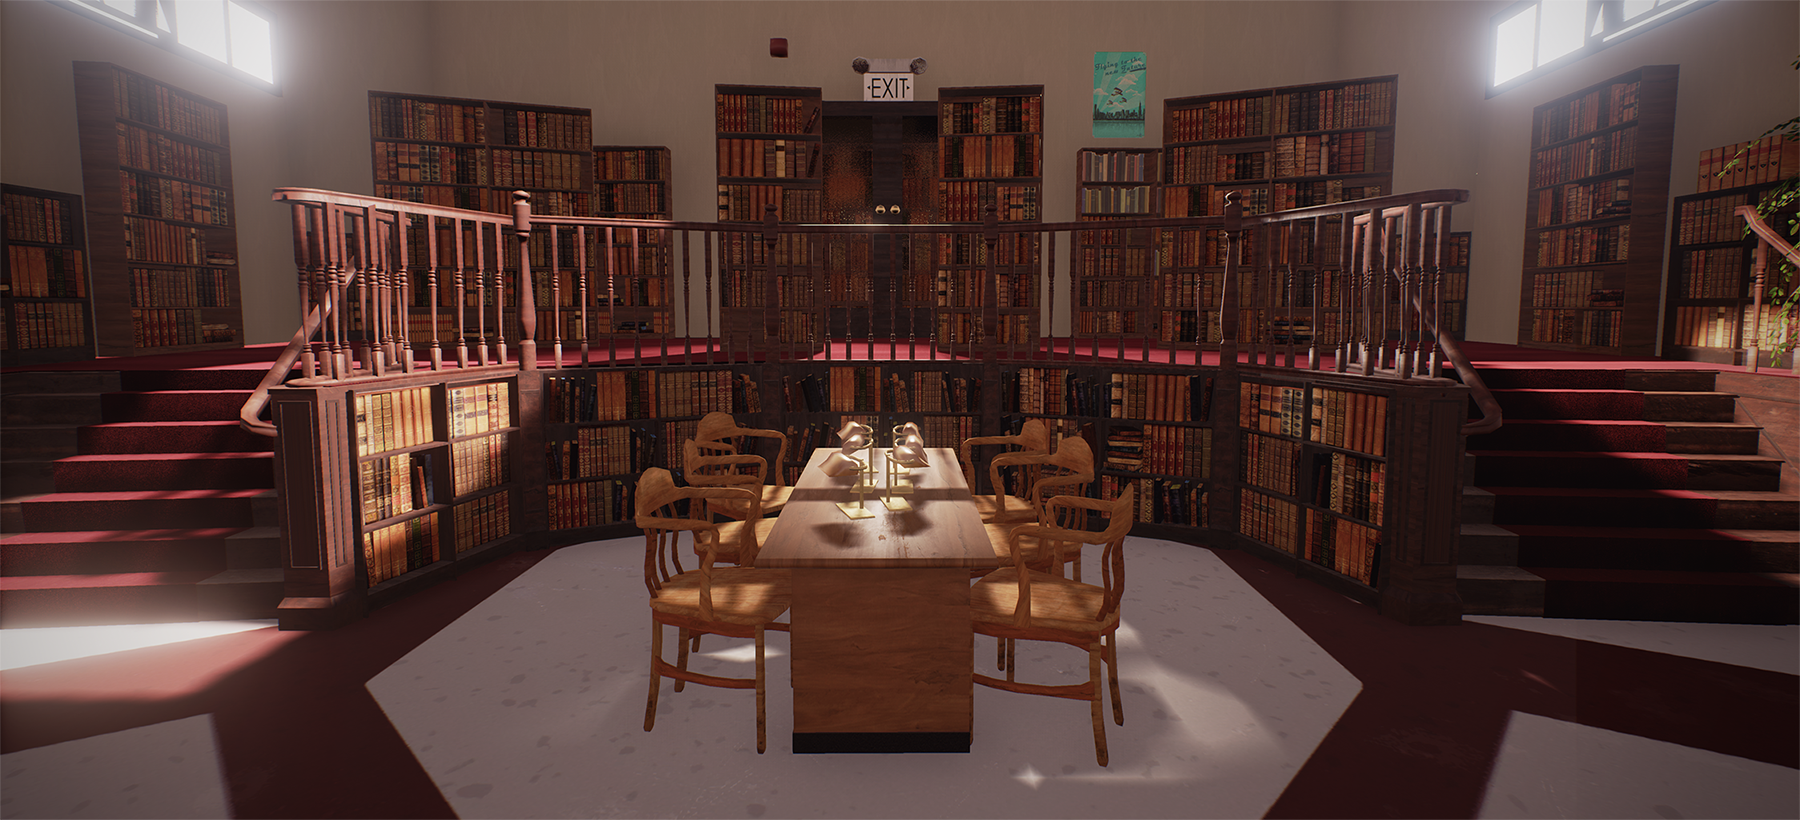 Ld library. Баффи библиотека. Buffy the Vampire Slayer Library. Магическая библиотека арт. Библиотека 3d моделей отдельных деталей.